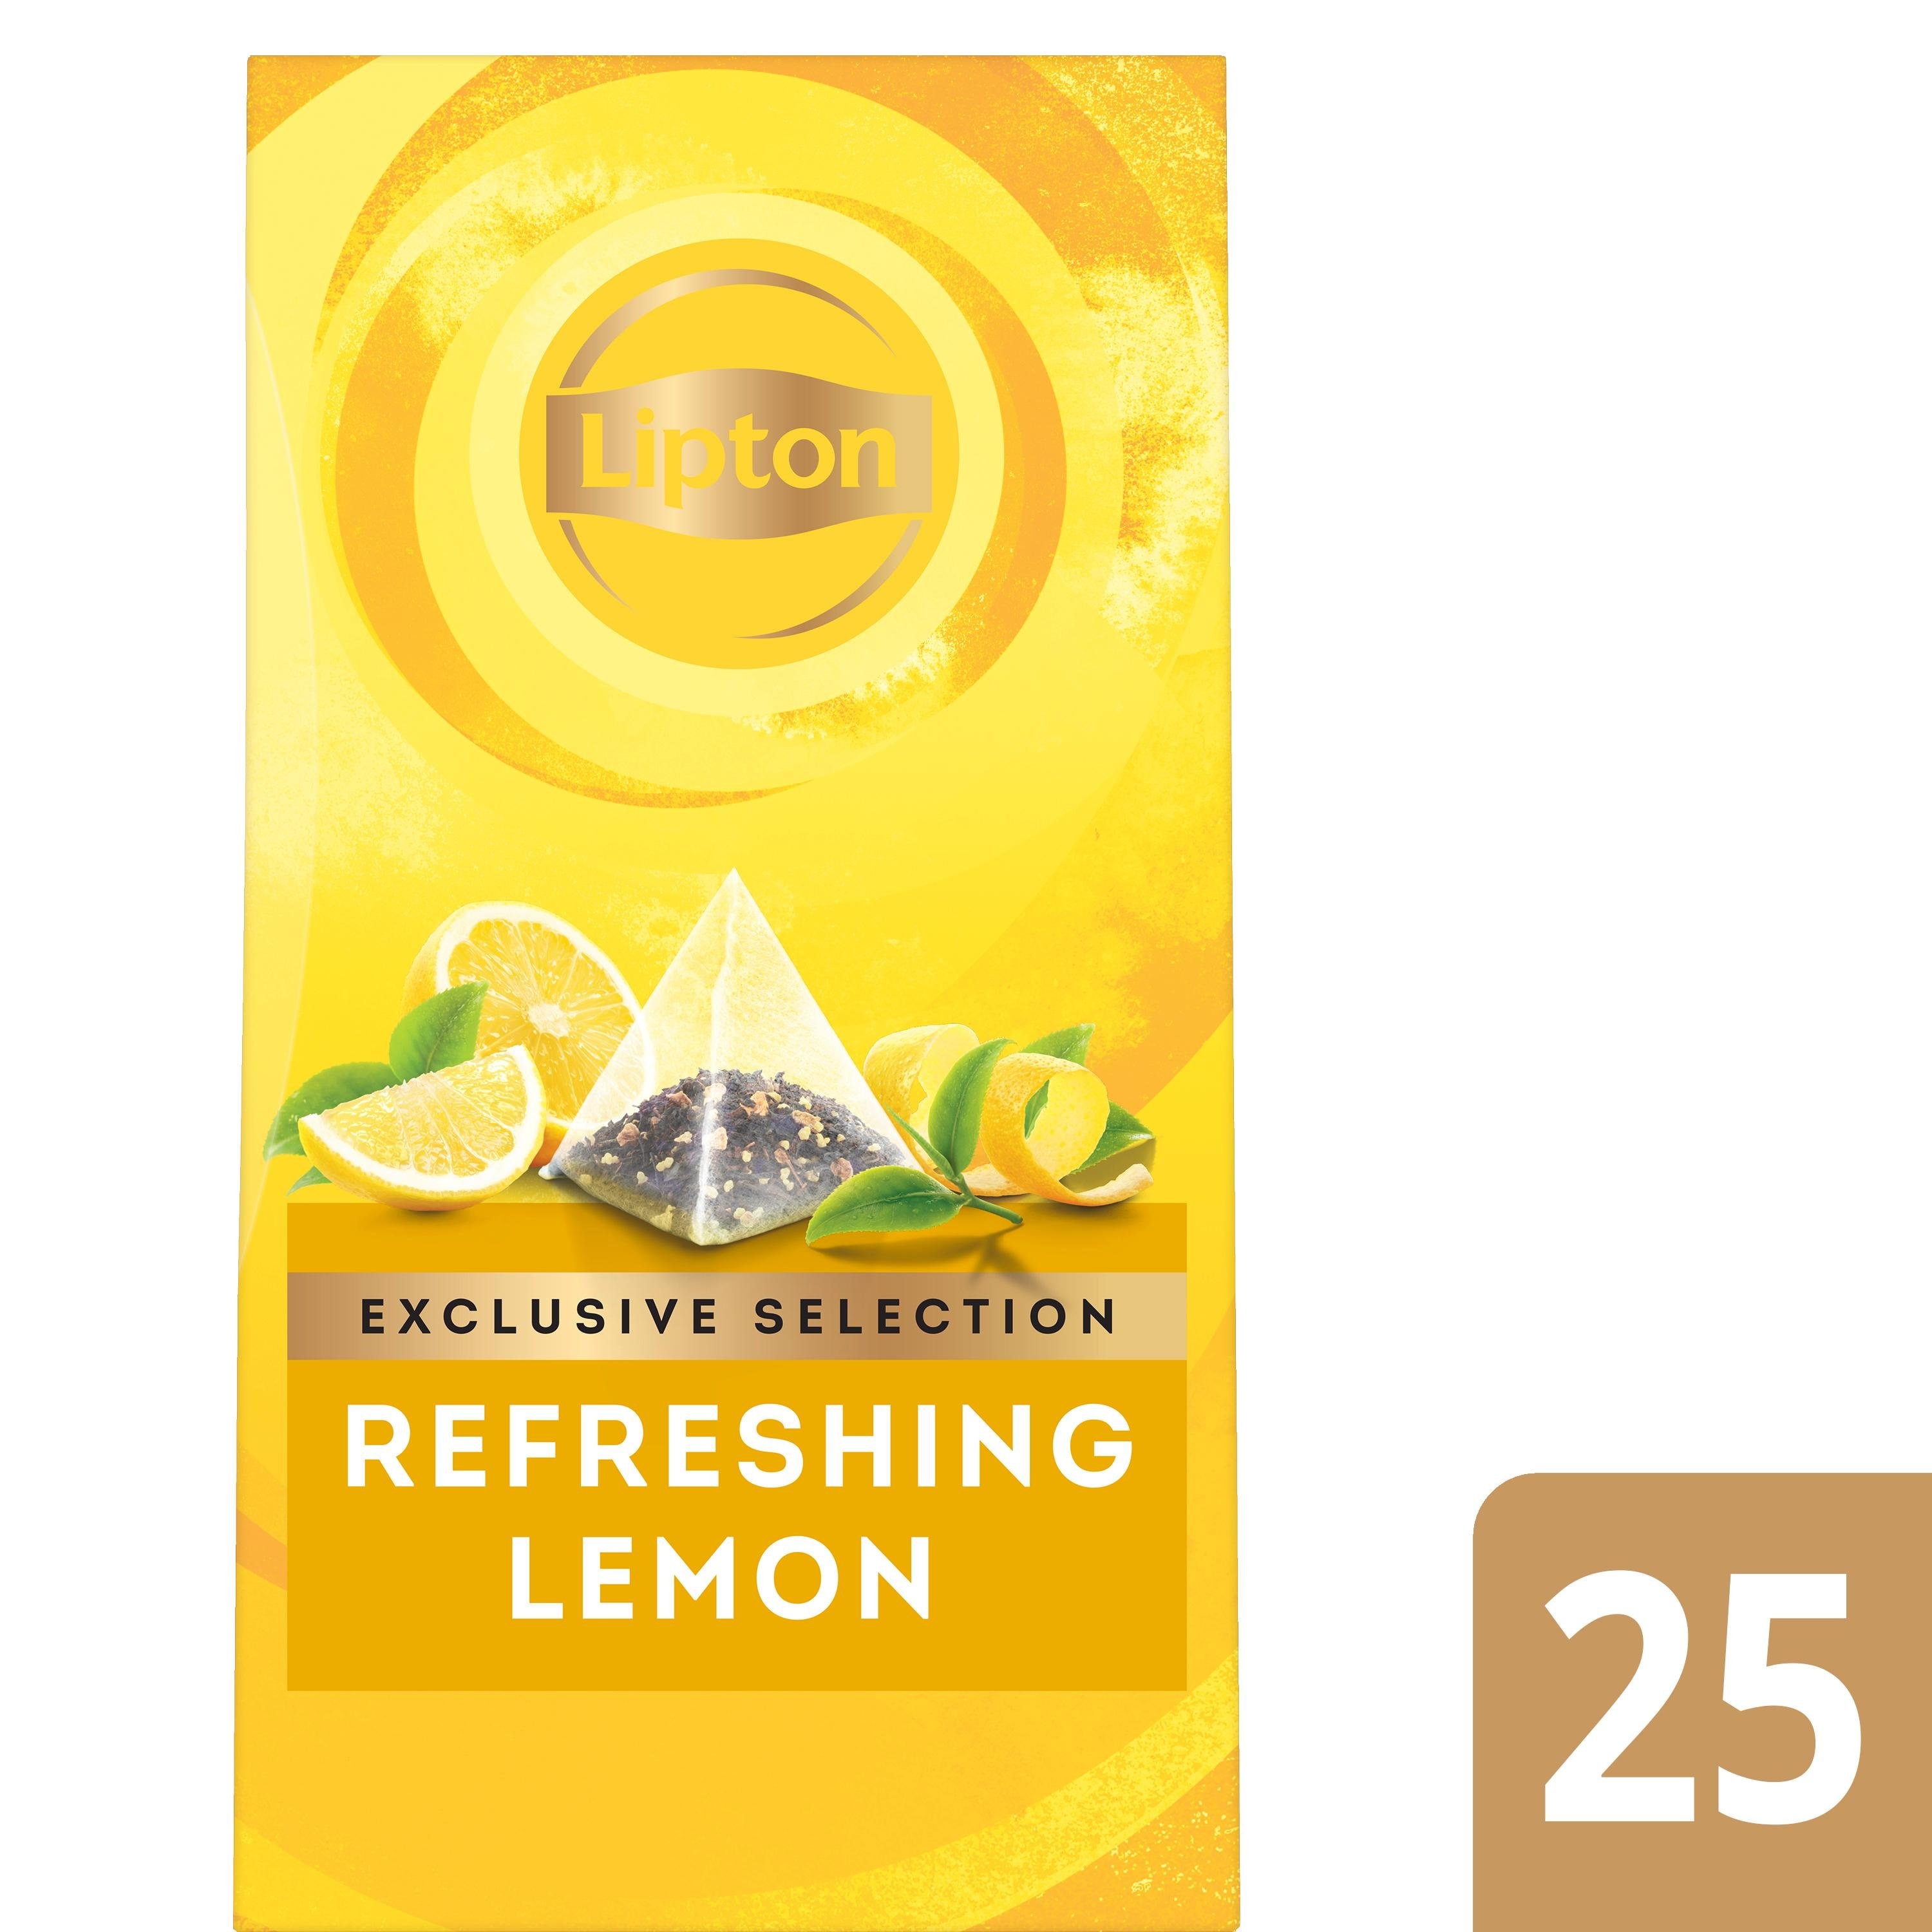 Lipton Exclusive Selection Refreshing Lemon - 